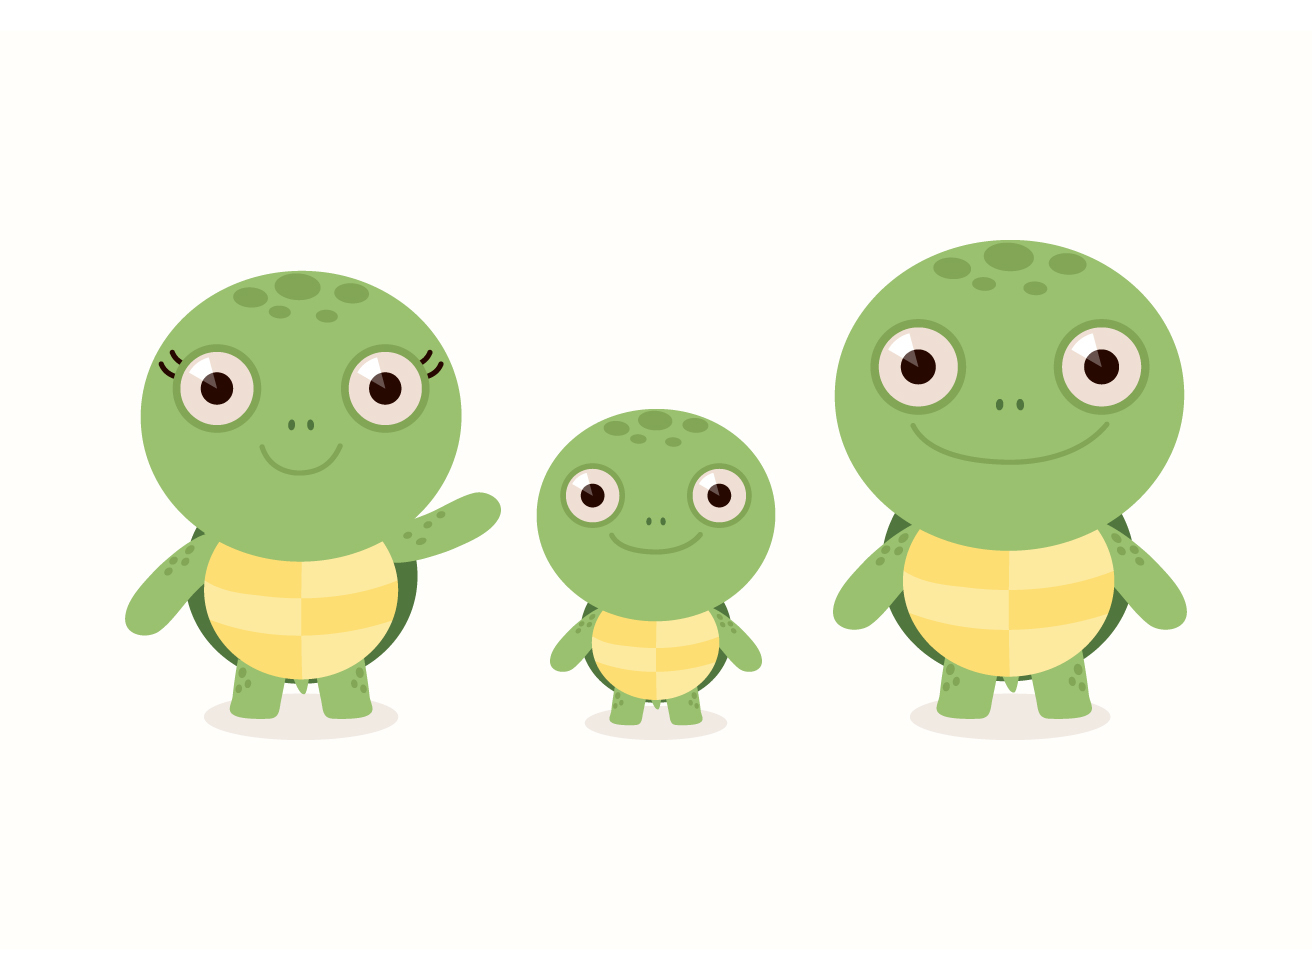 Download Free Vector Cartoon Turtle Set Vector Art & Graphics | freevector.com